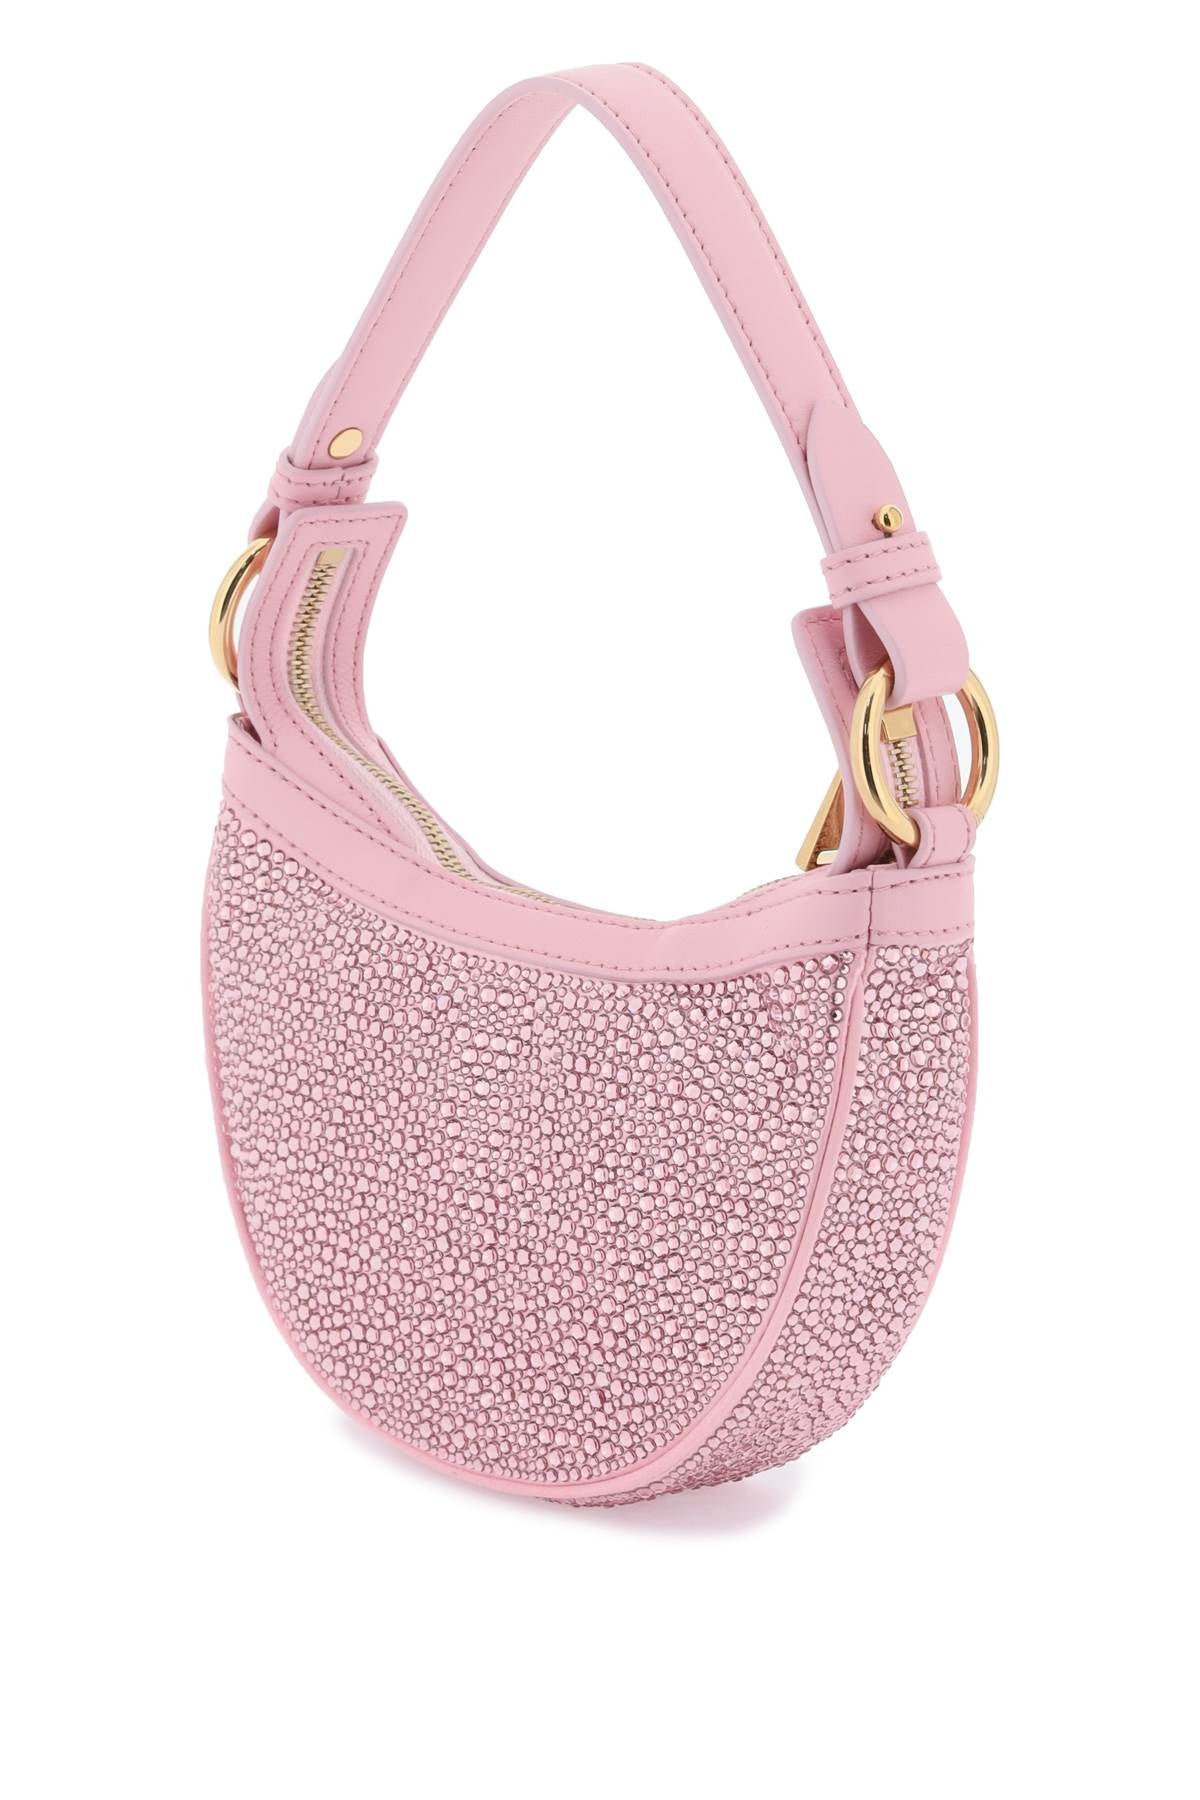 Elegant Pink Mini Hobo Handbag with Crystals and Iconic Medusa by a Leading Fashion Designer